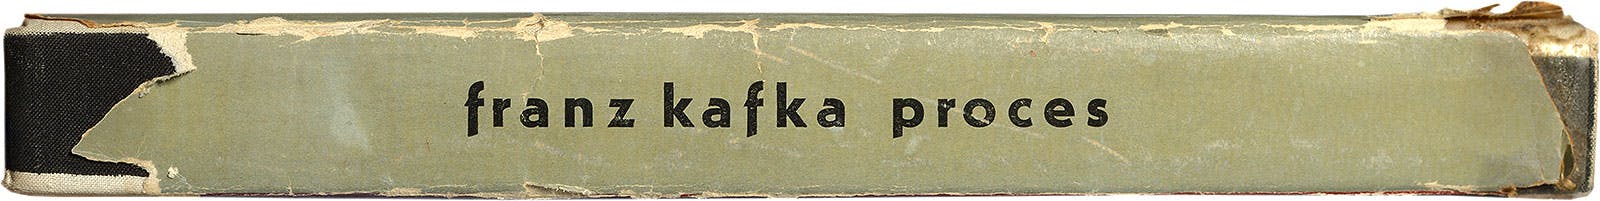 Czech version by Franz Kafka